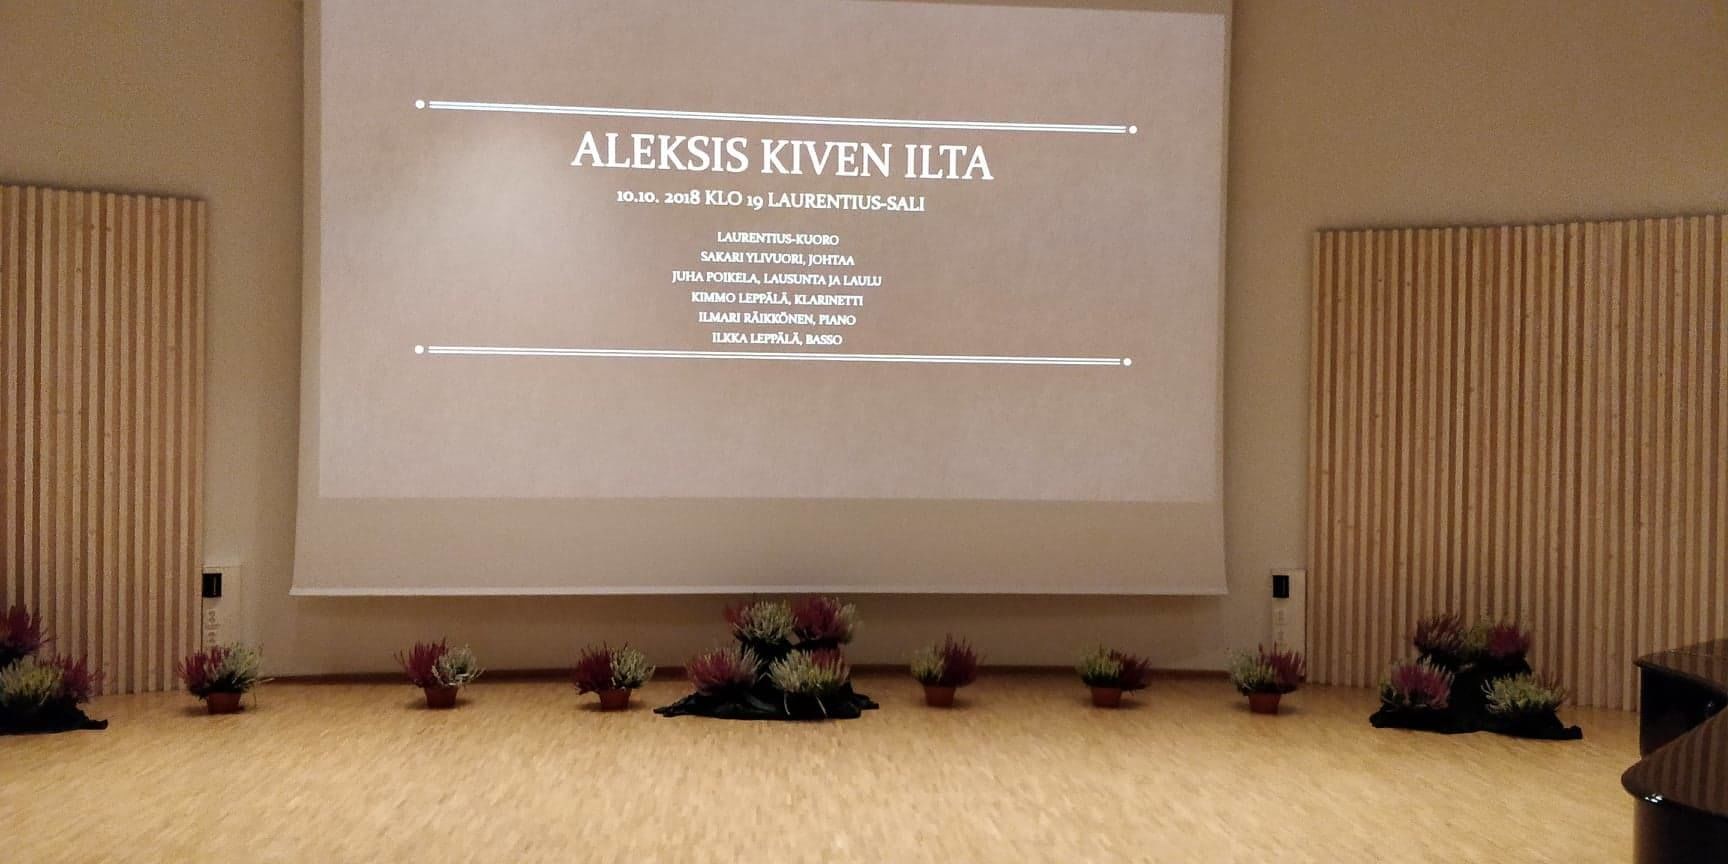 Upea Aleksis Kiven konsertti Laurentius-salissa 10.10.2018